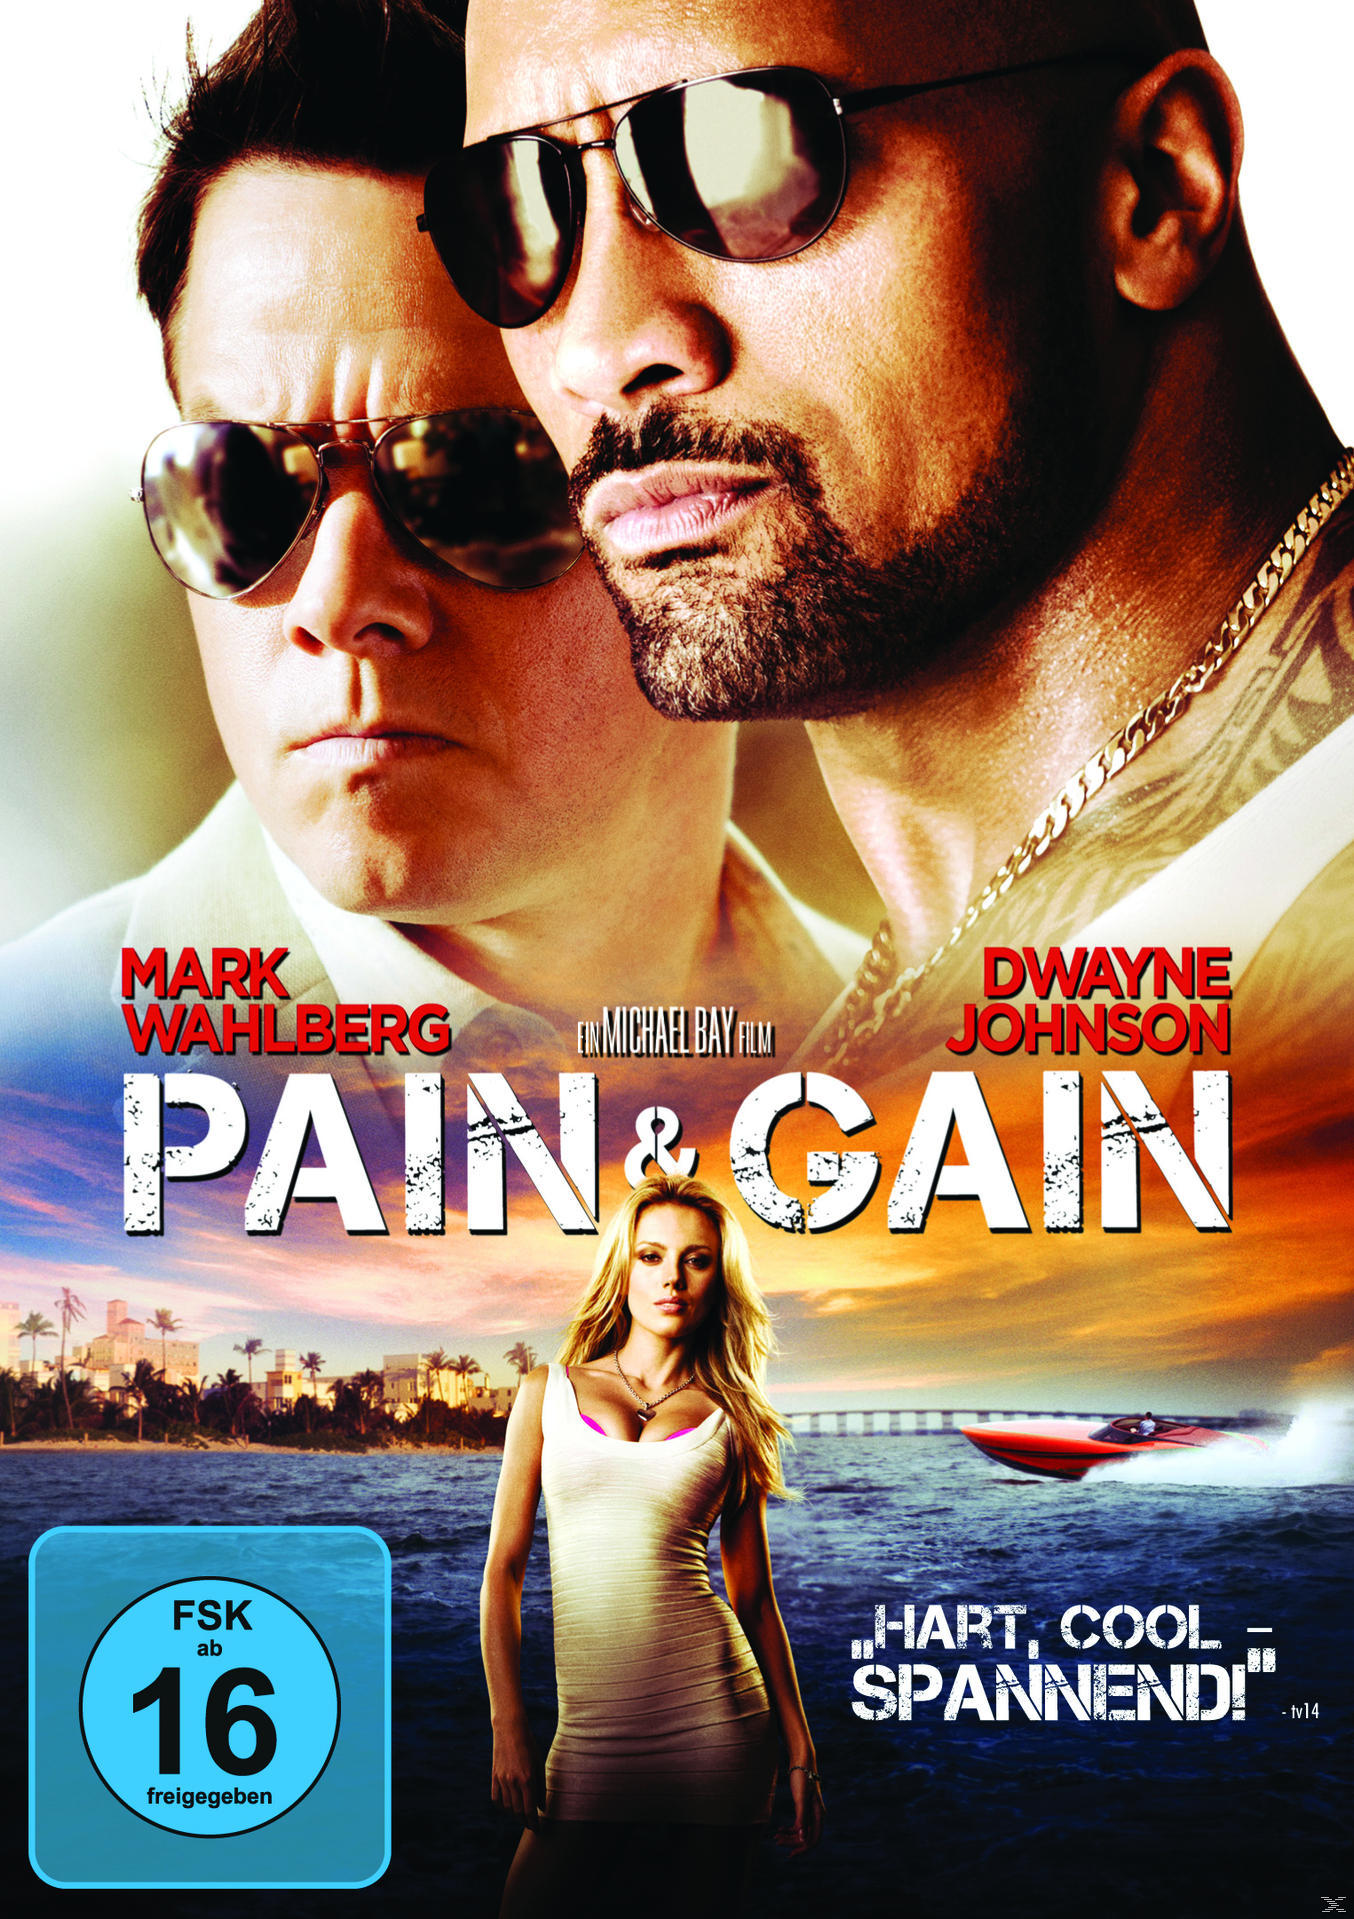 Pain Gain & DVD